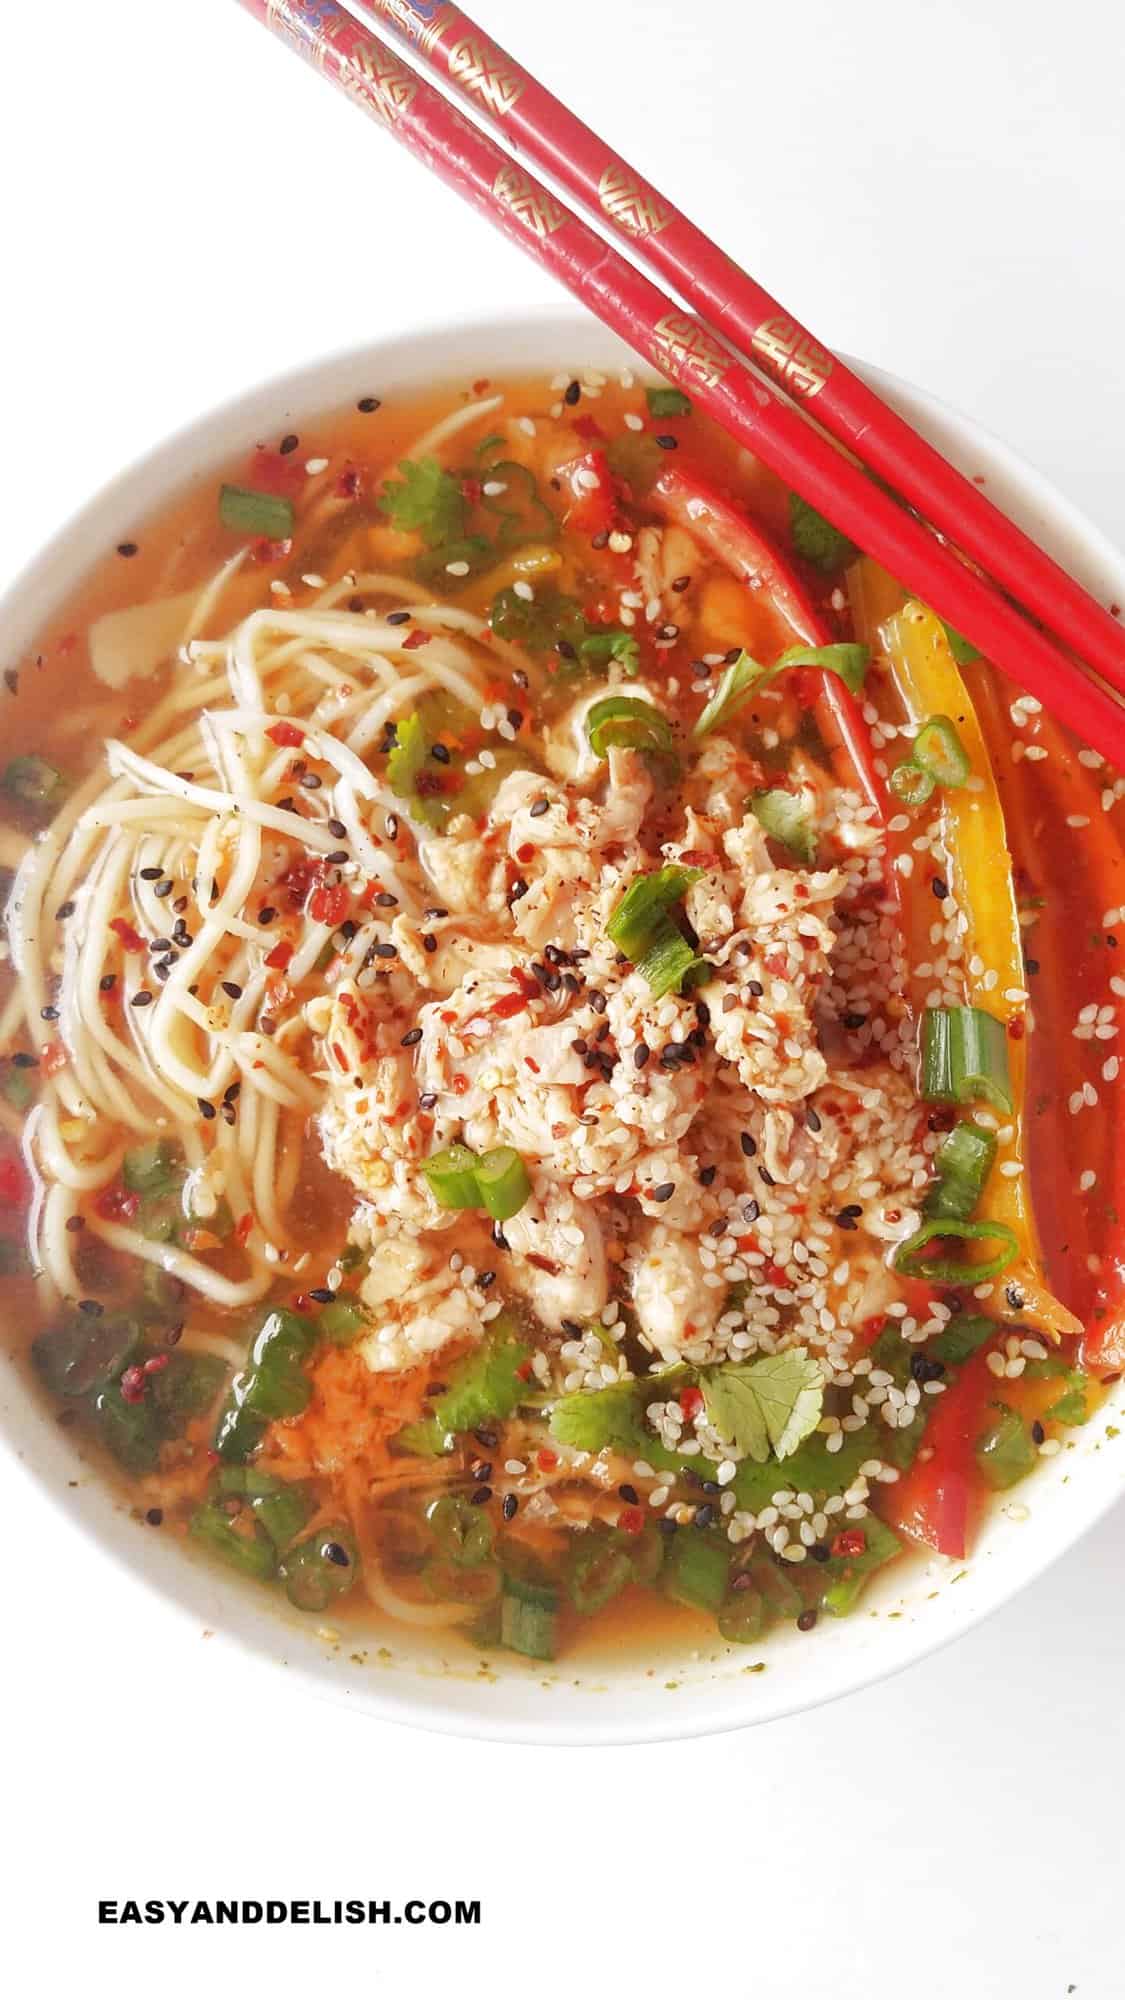 https://www.easyanddelish.com/wp-content/uploads/2023/02/Gluten-free-chicken-noodle-soup-with-chopsticks-scaled.jpg